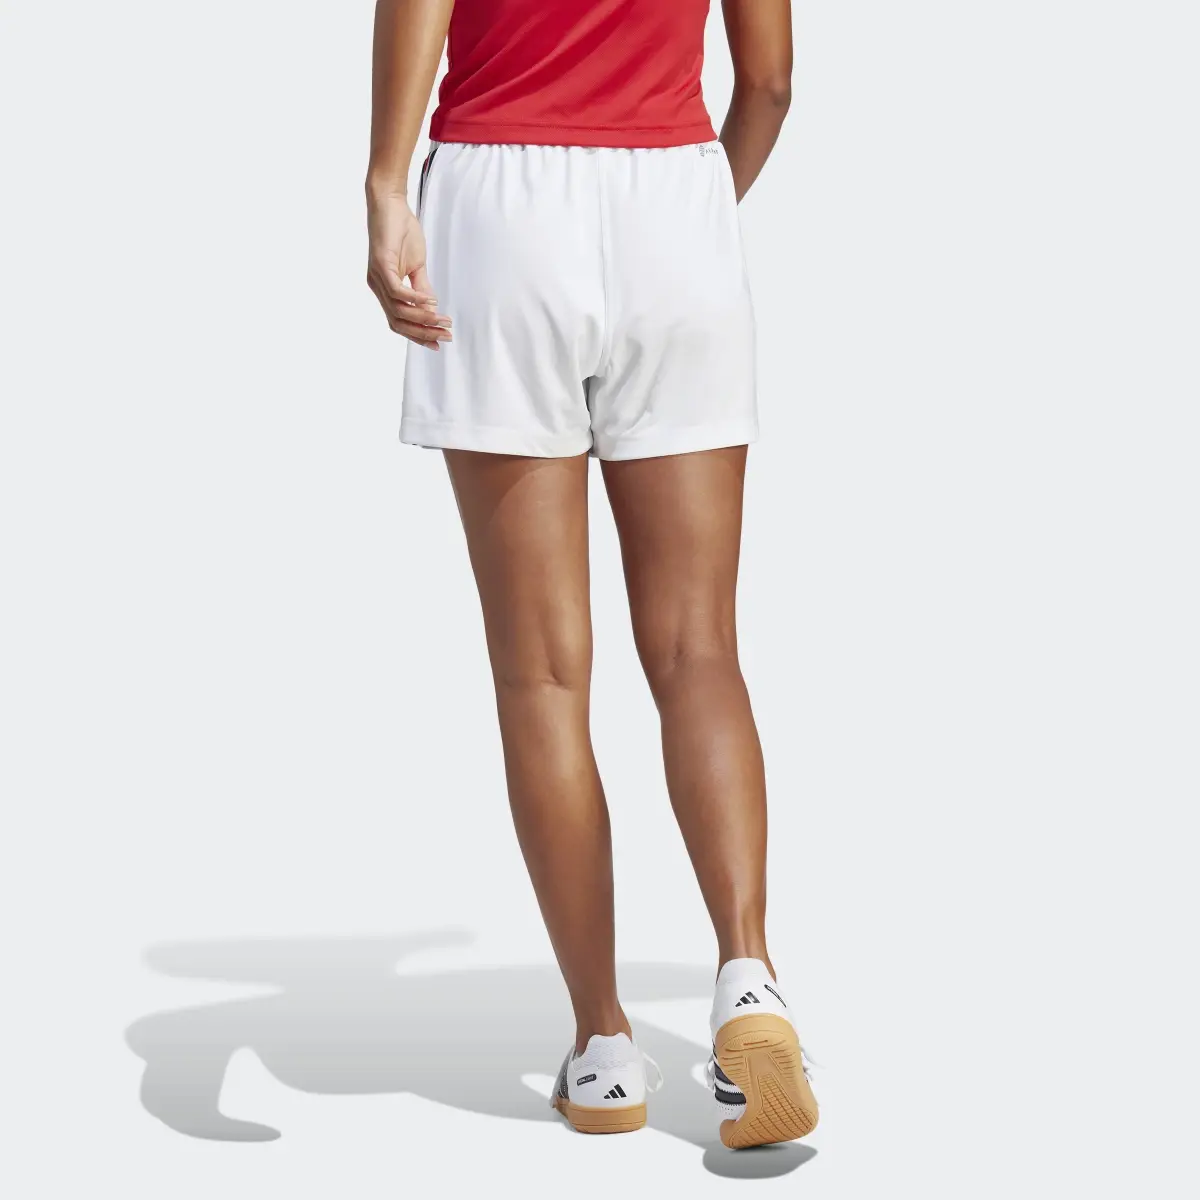 Adidas France Handball Shorts. 2